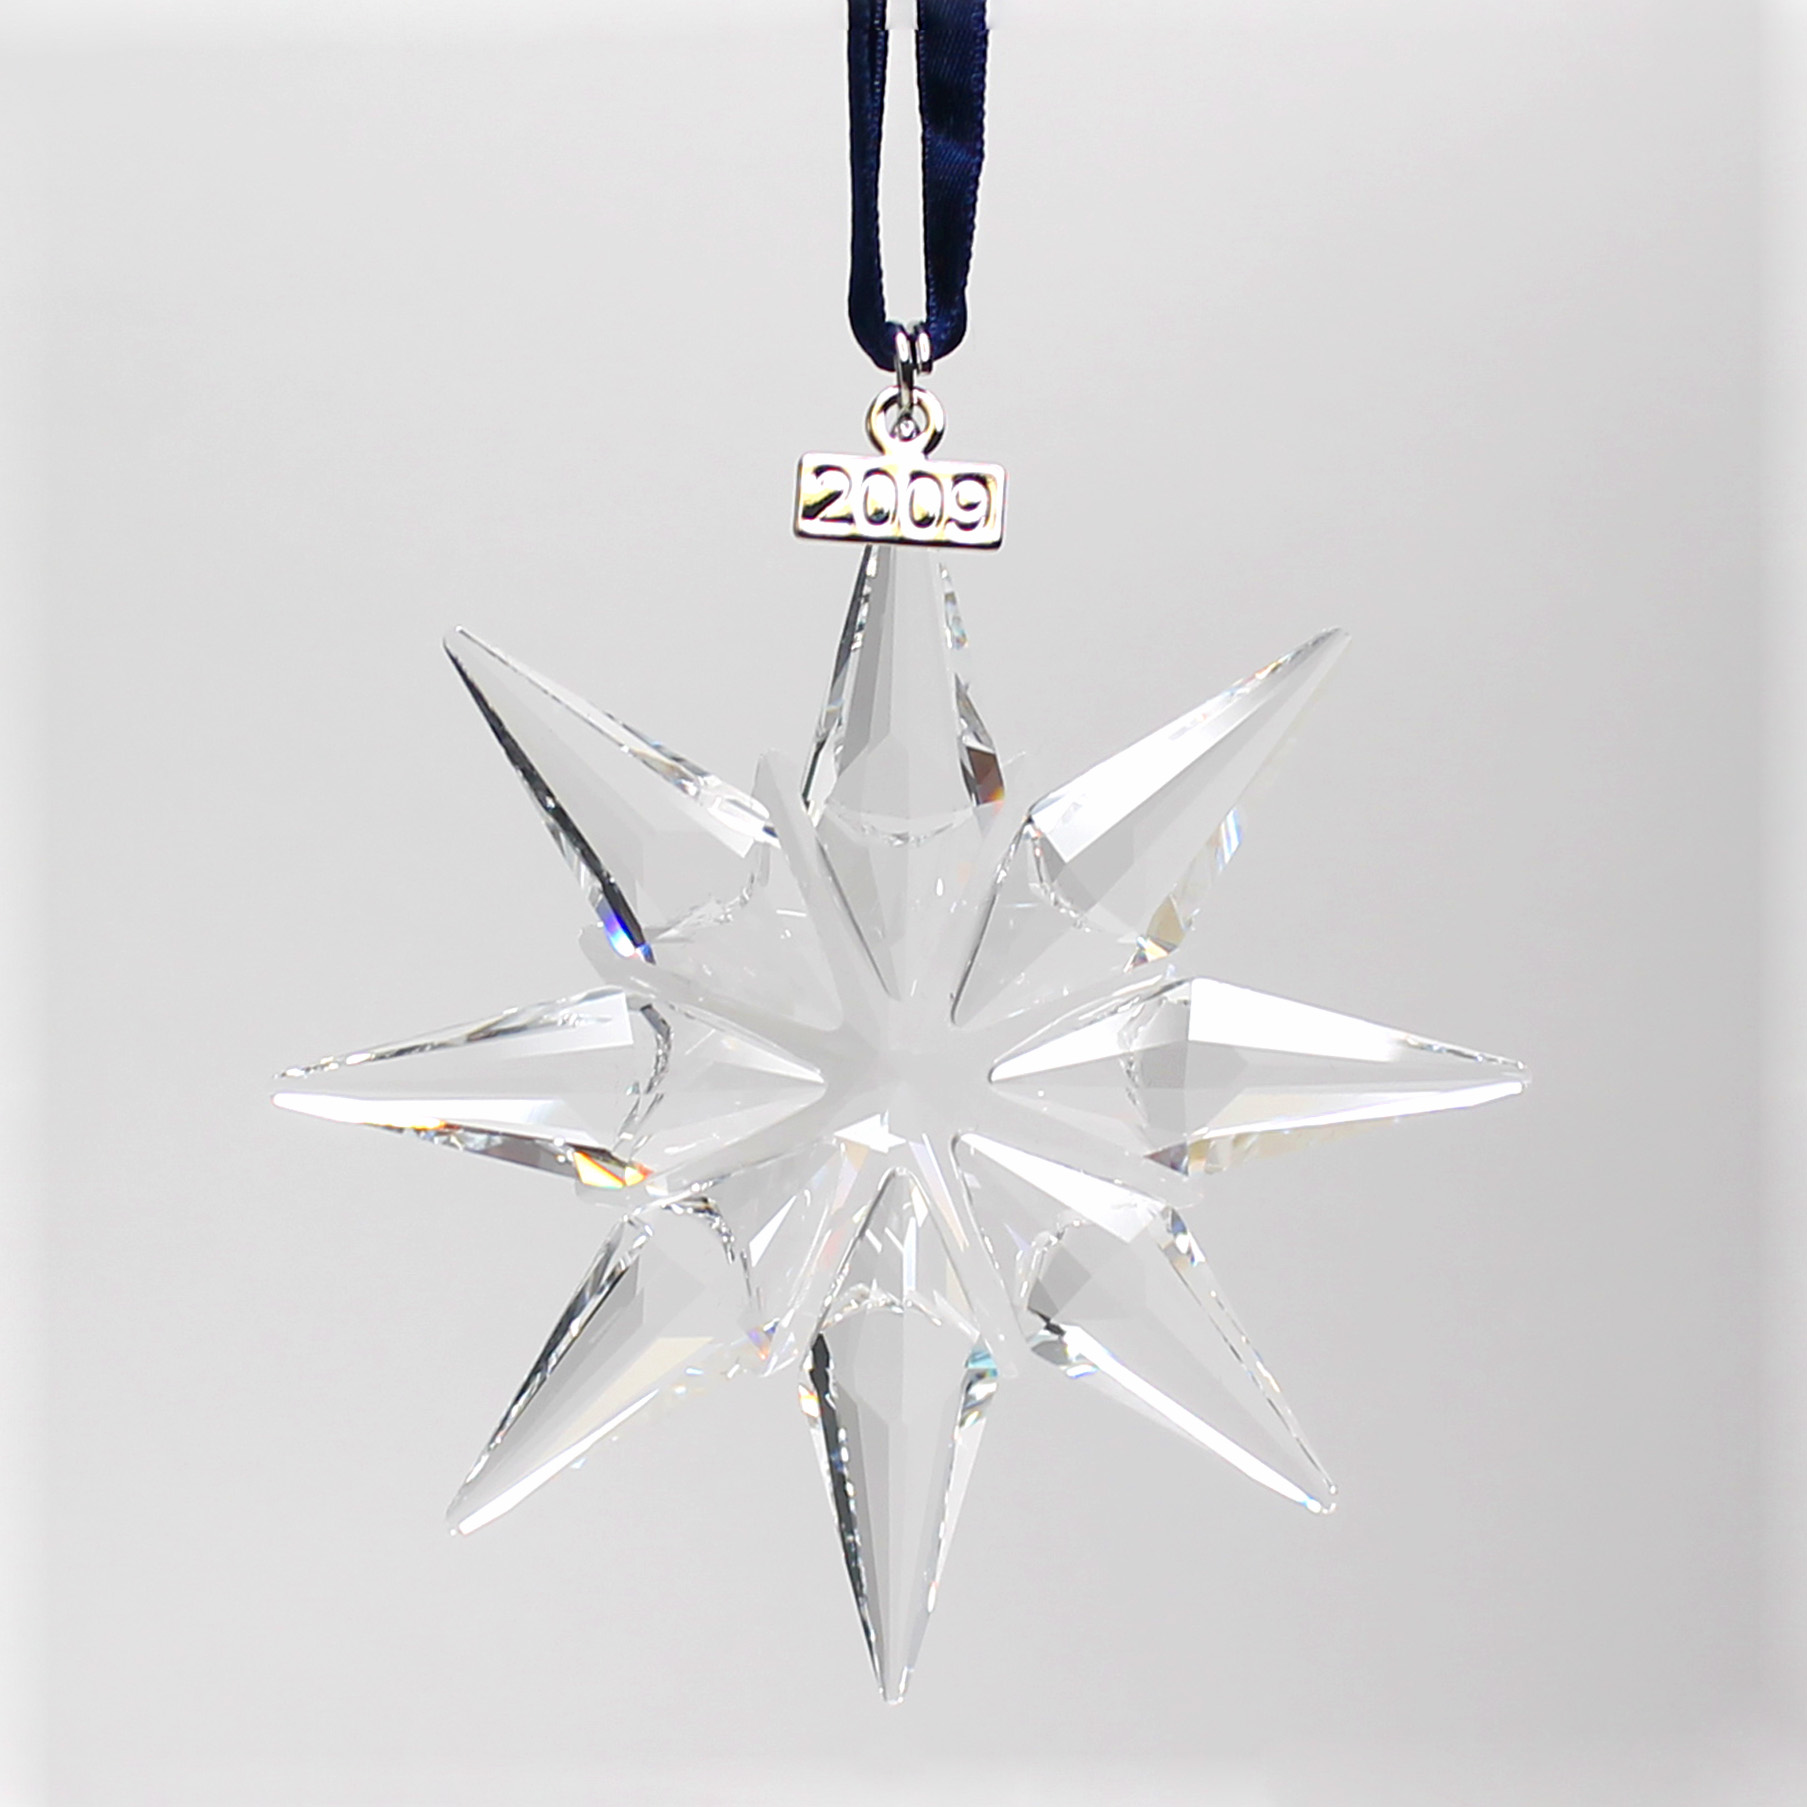 Swarovski Crystal Ornament 983702 MIB 2009 Christmas Snowflake | eBay